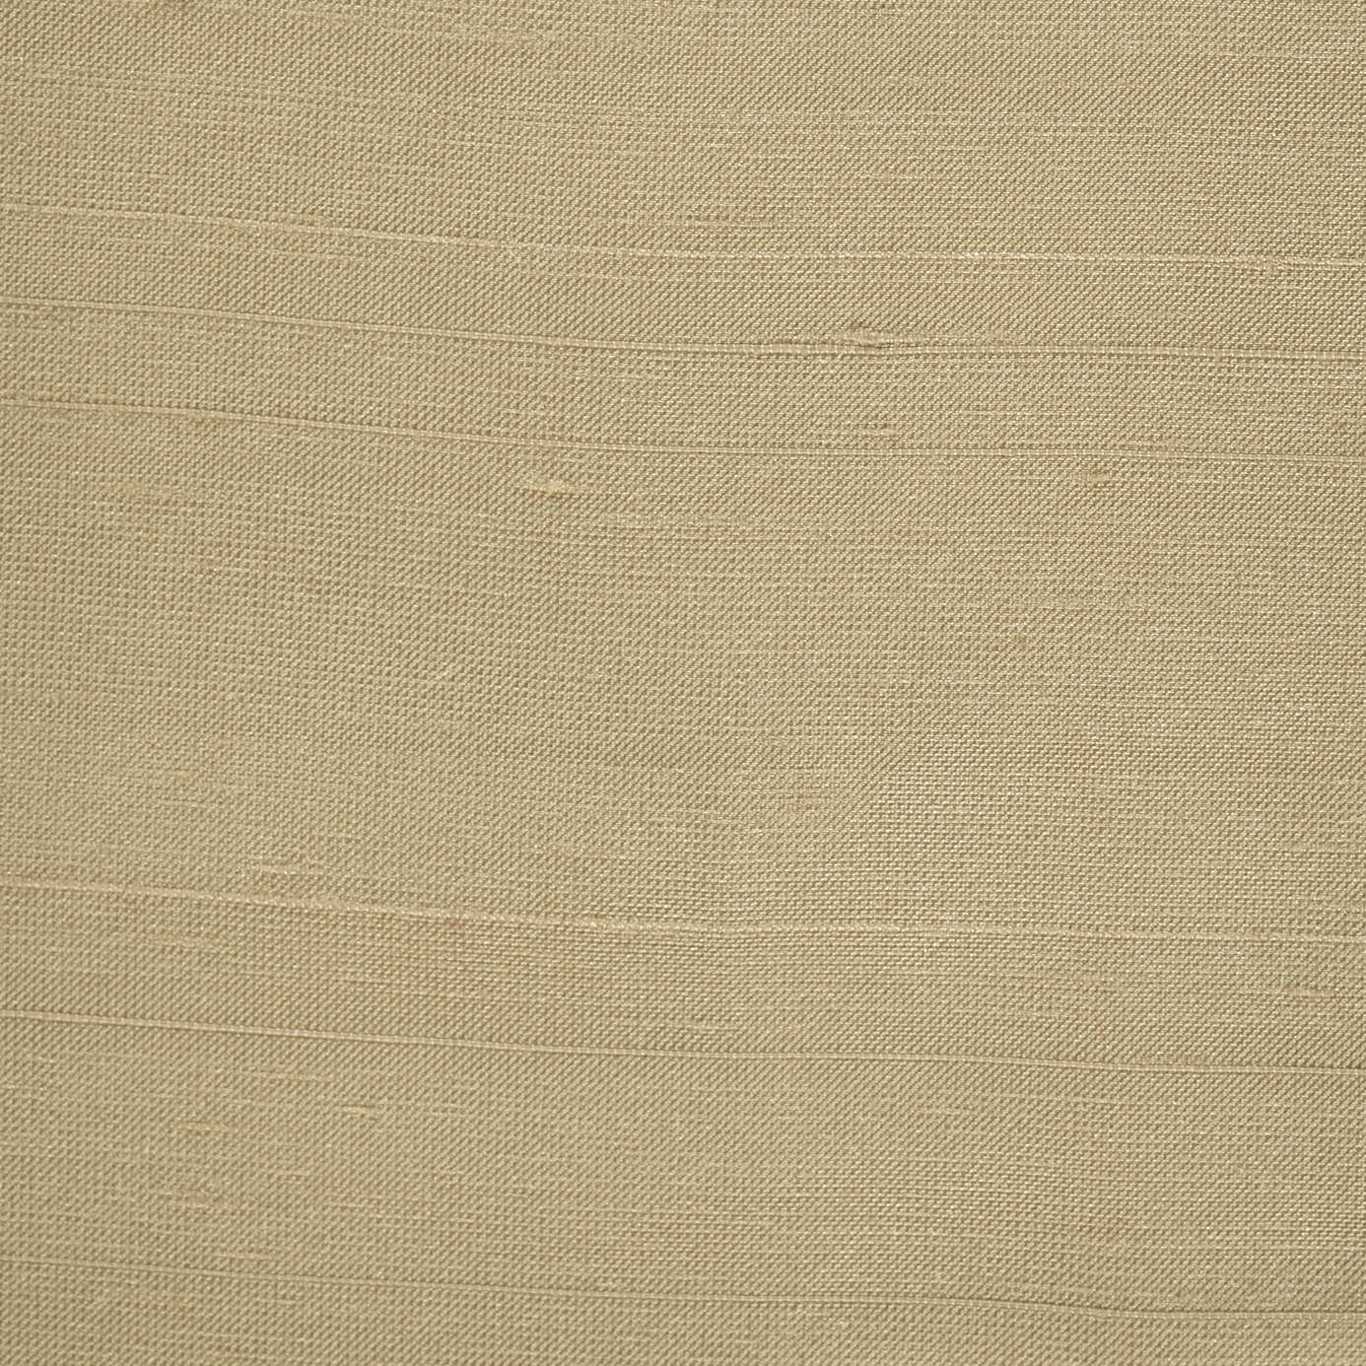 Deflect Fabric by Harlequin - HPOL440662 - Marzipan